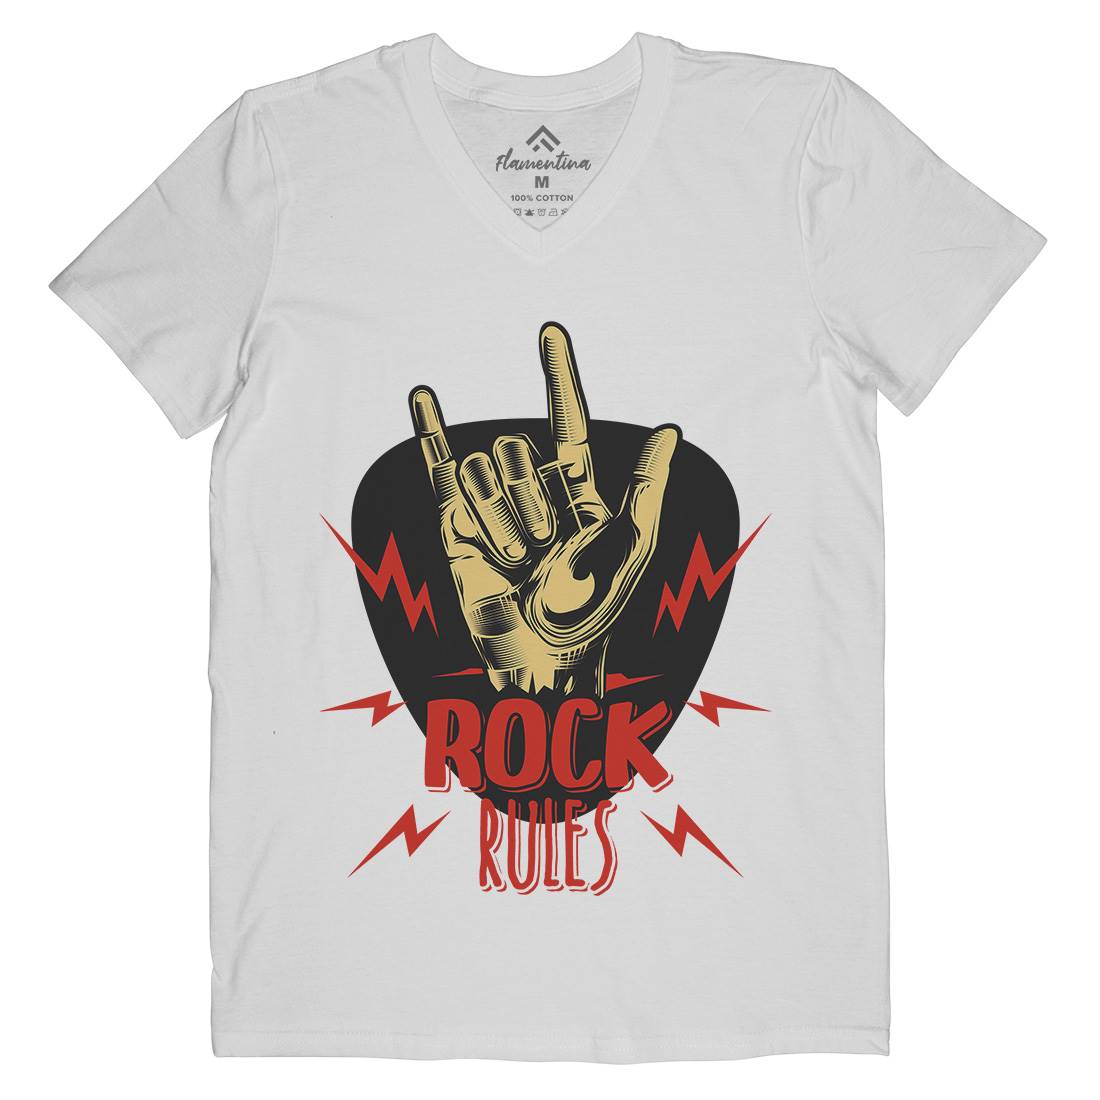 Rock Rules Mens V-Neck T-Shirt Music C871